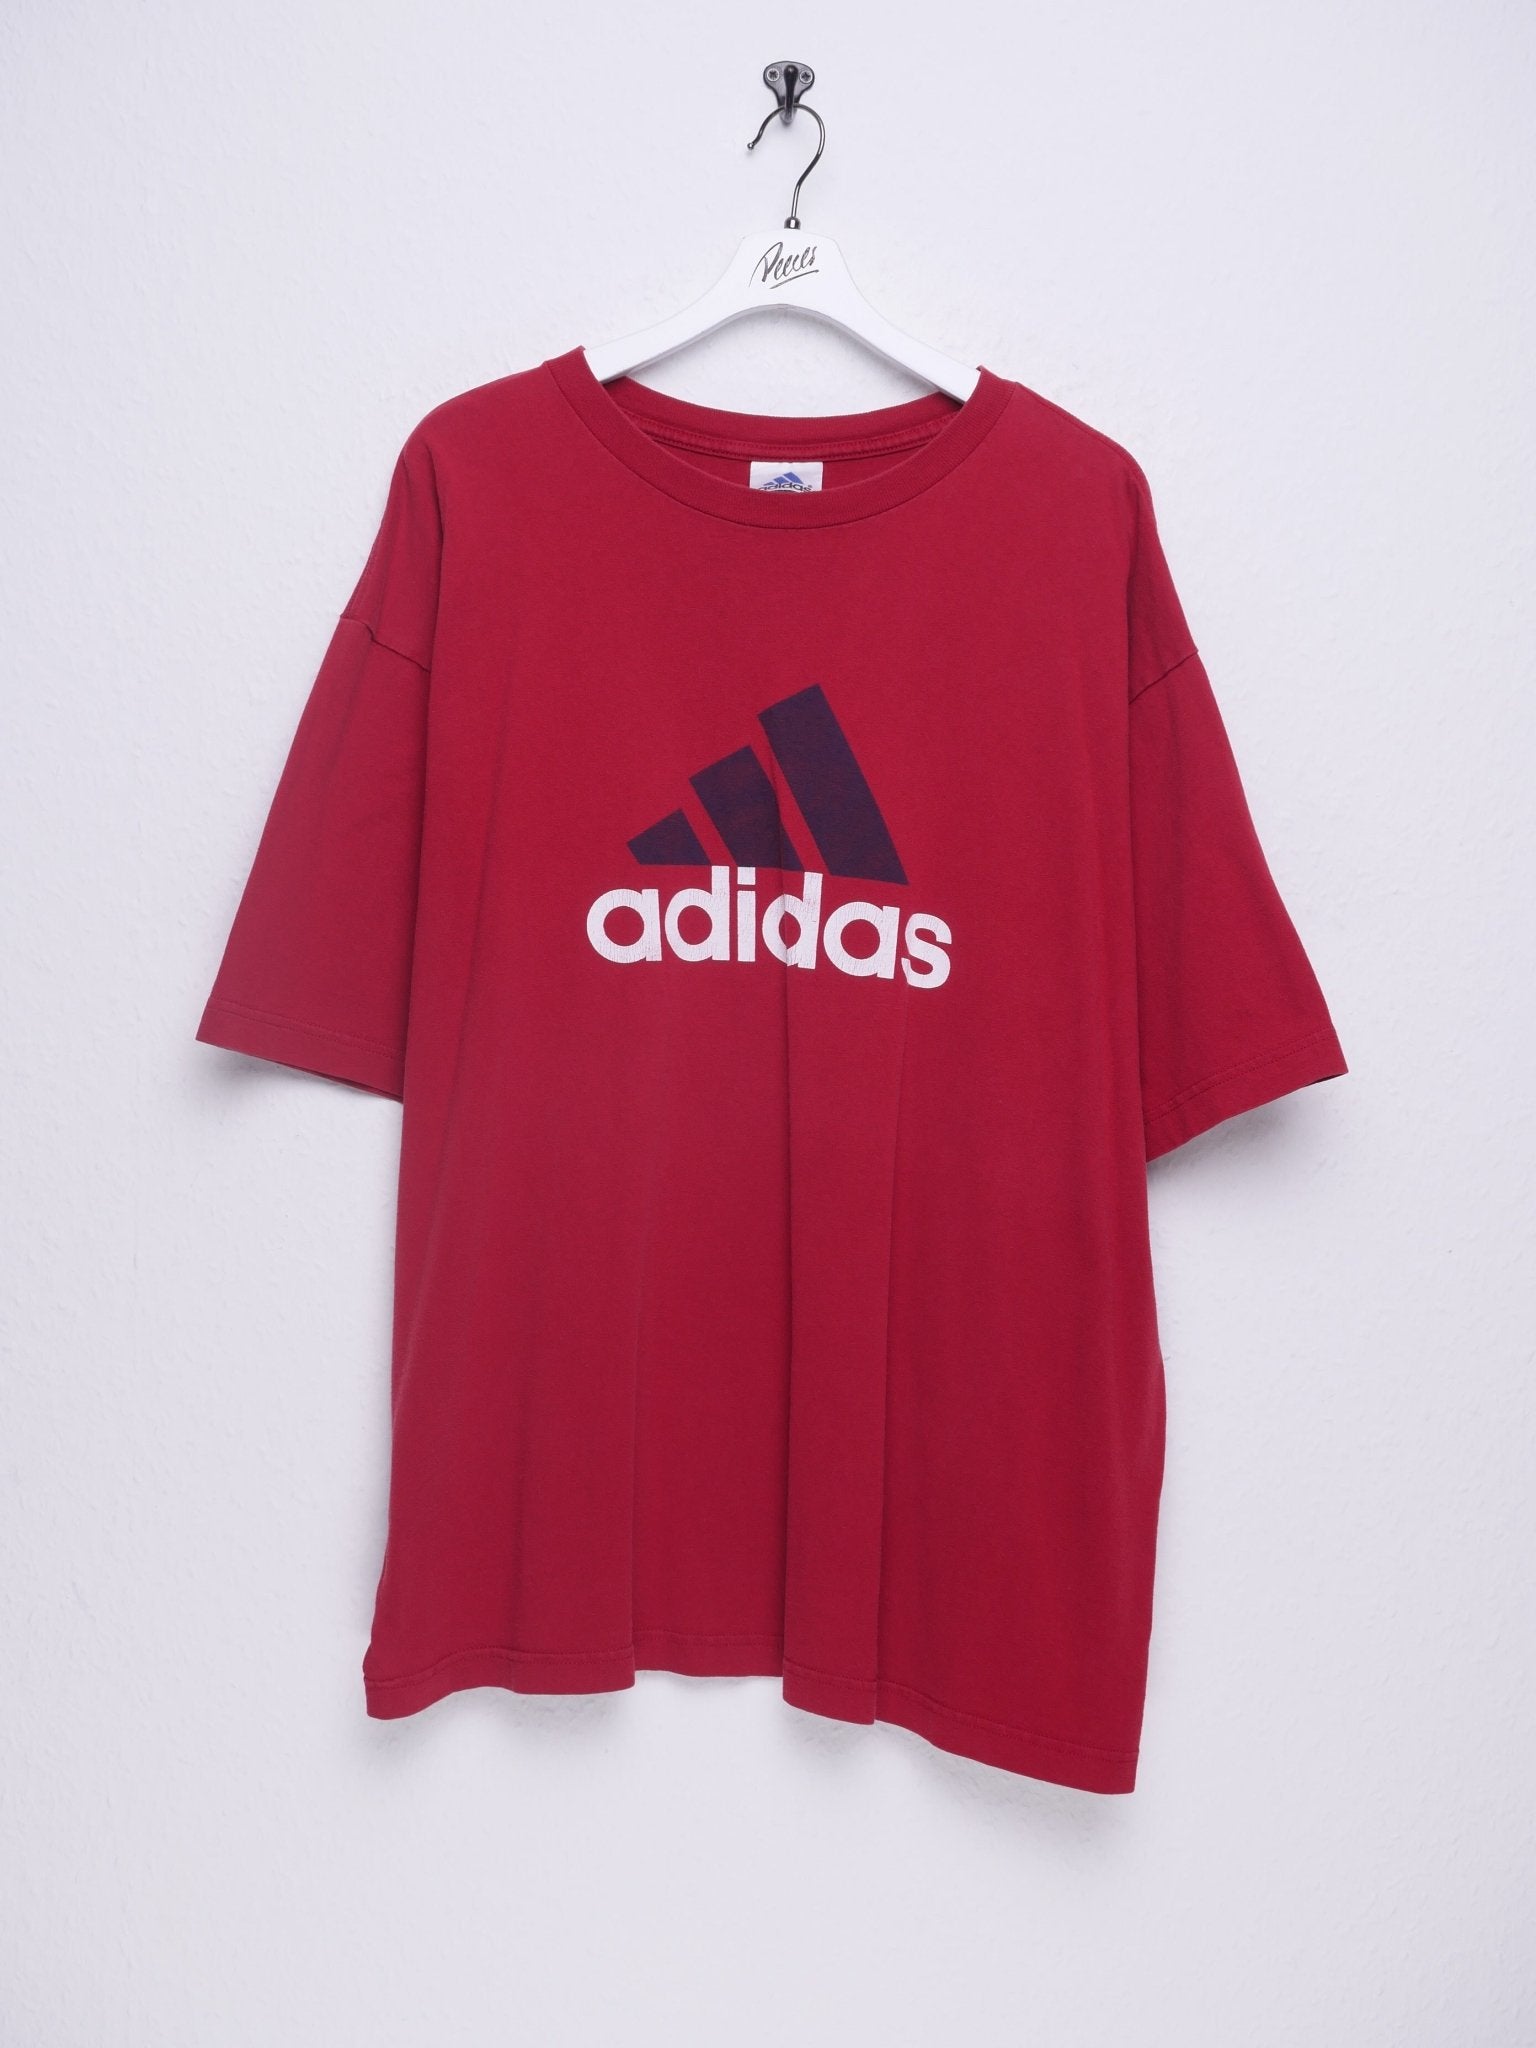 adidas printed Logo red Shirt - Peeces